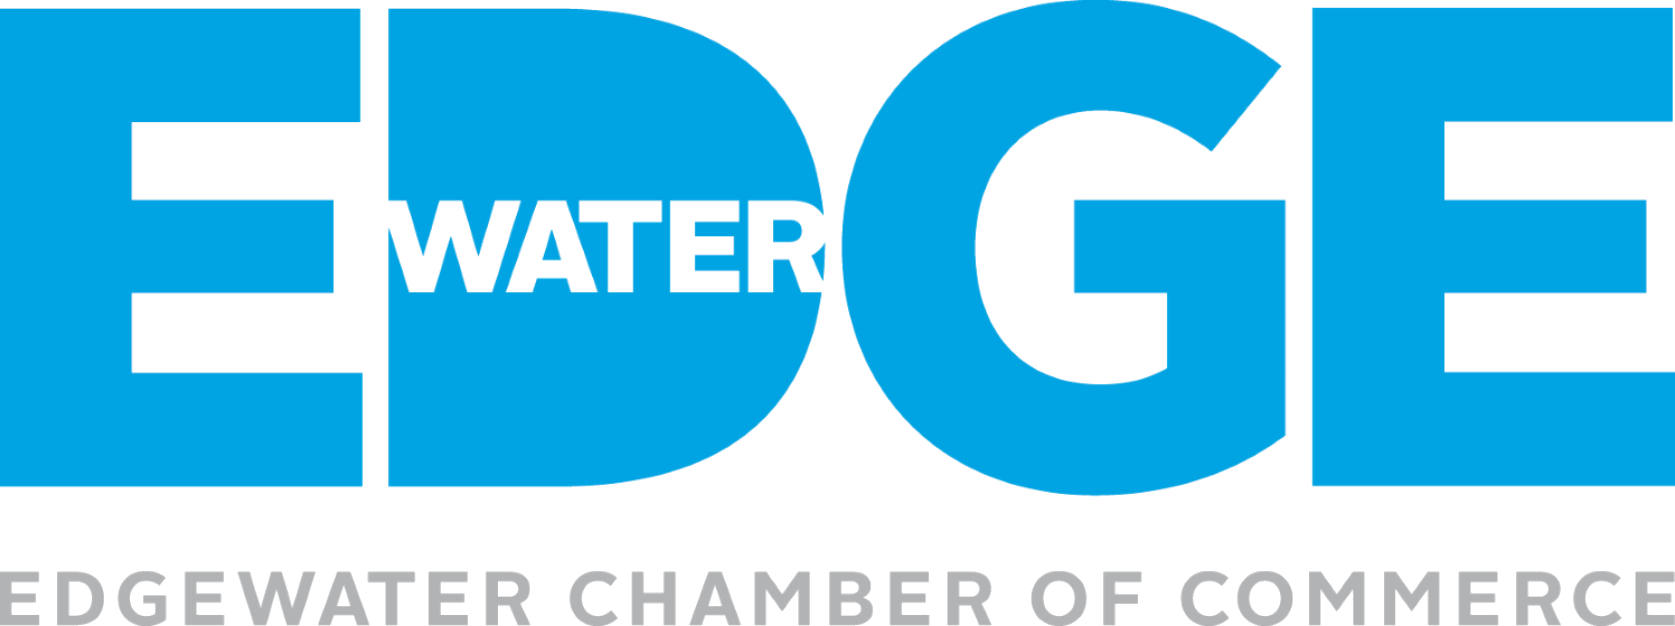 edgewater chamber logo (1).png